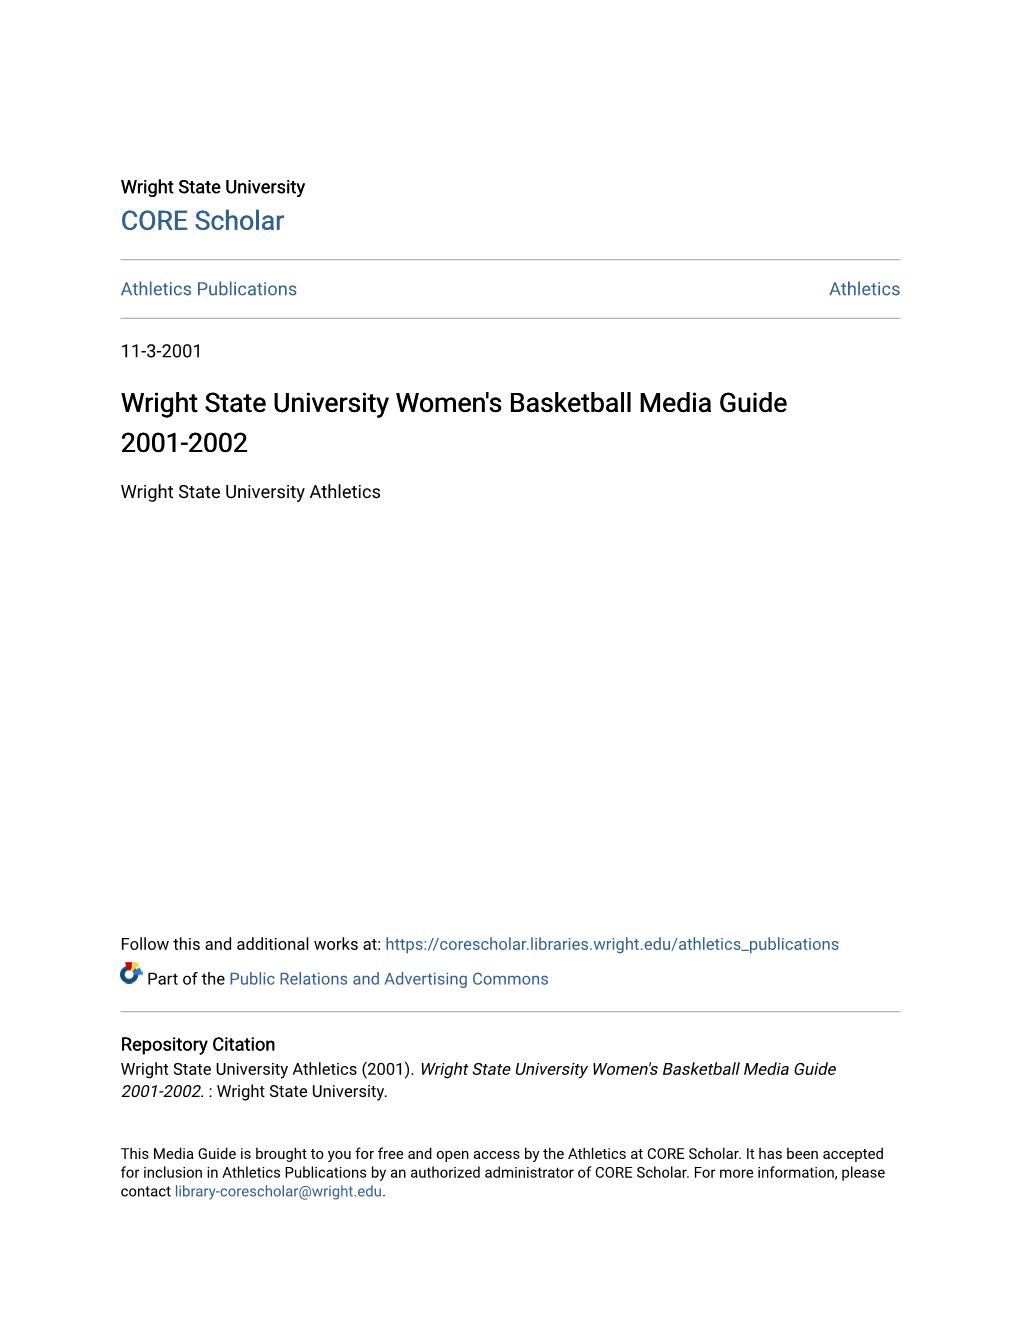 Wright State University Women's Basketball Media Guide 2001-2002